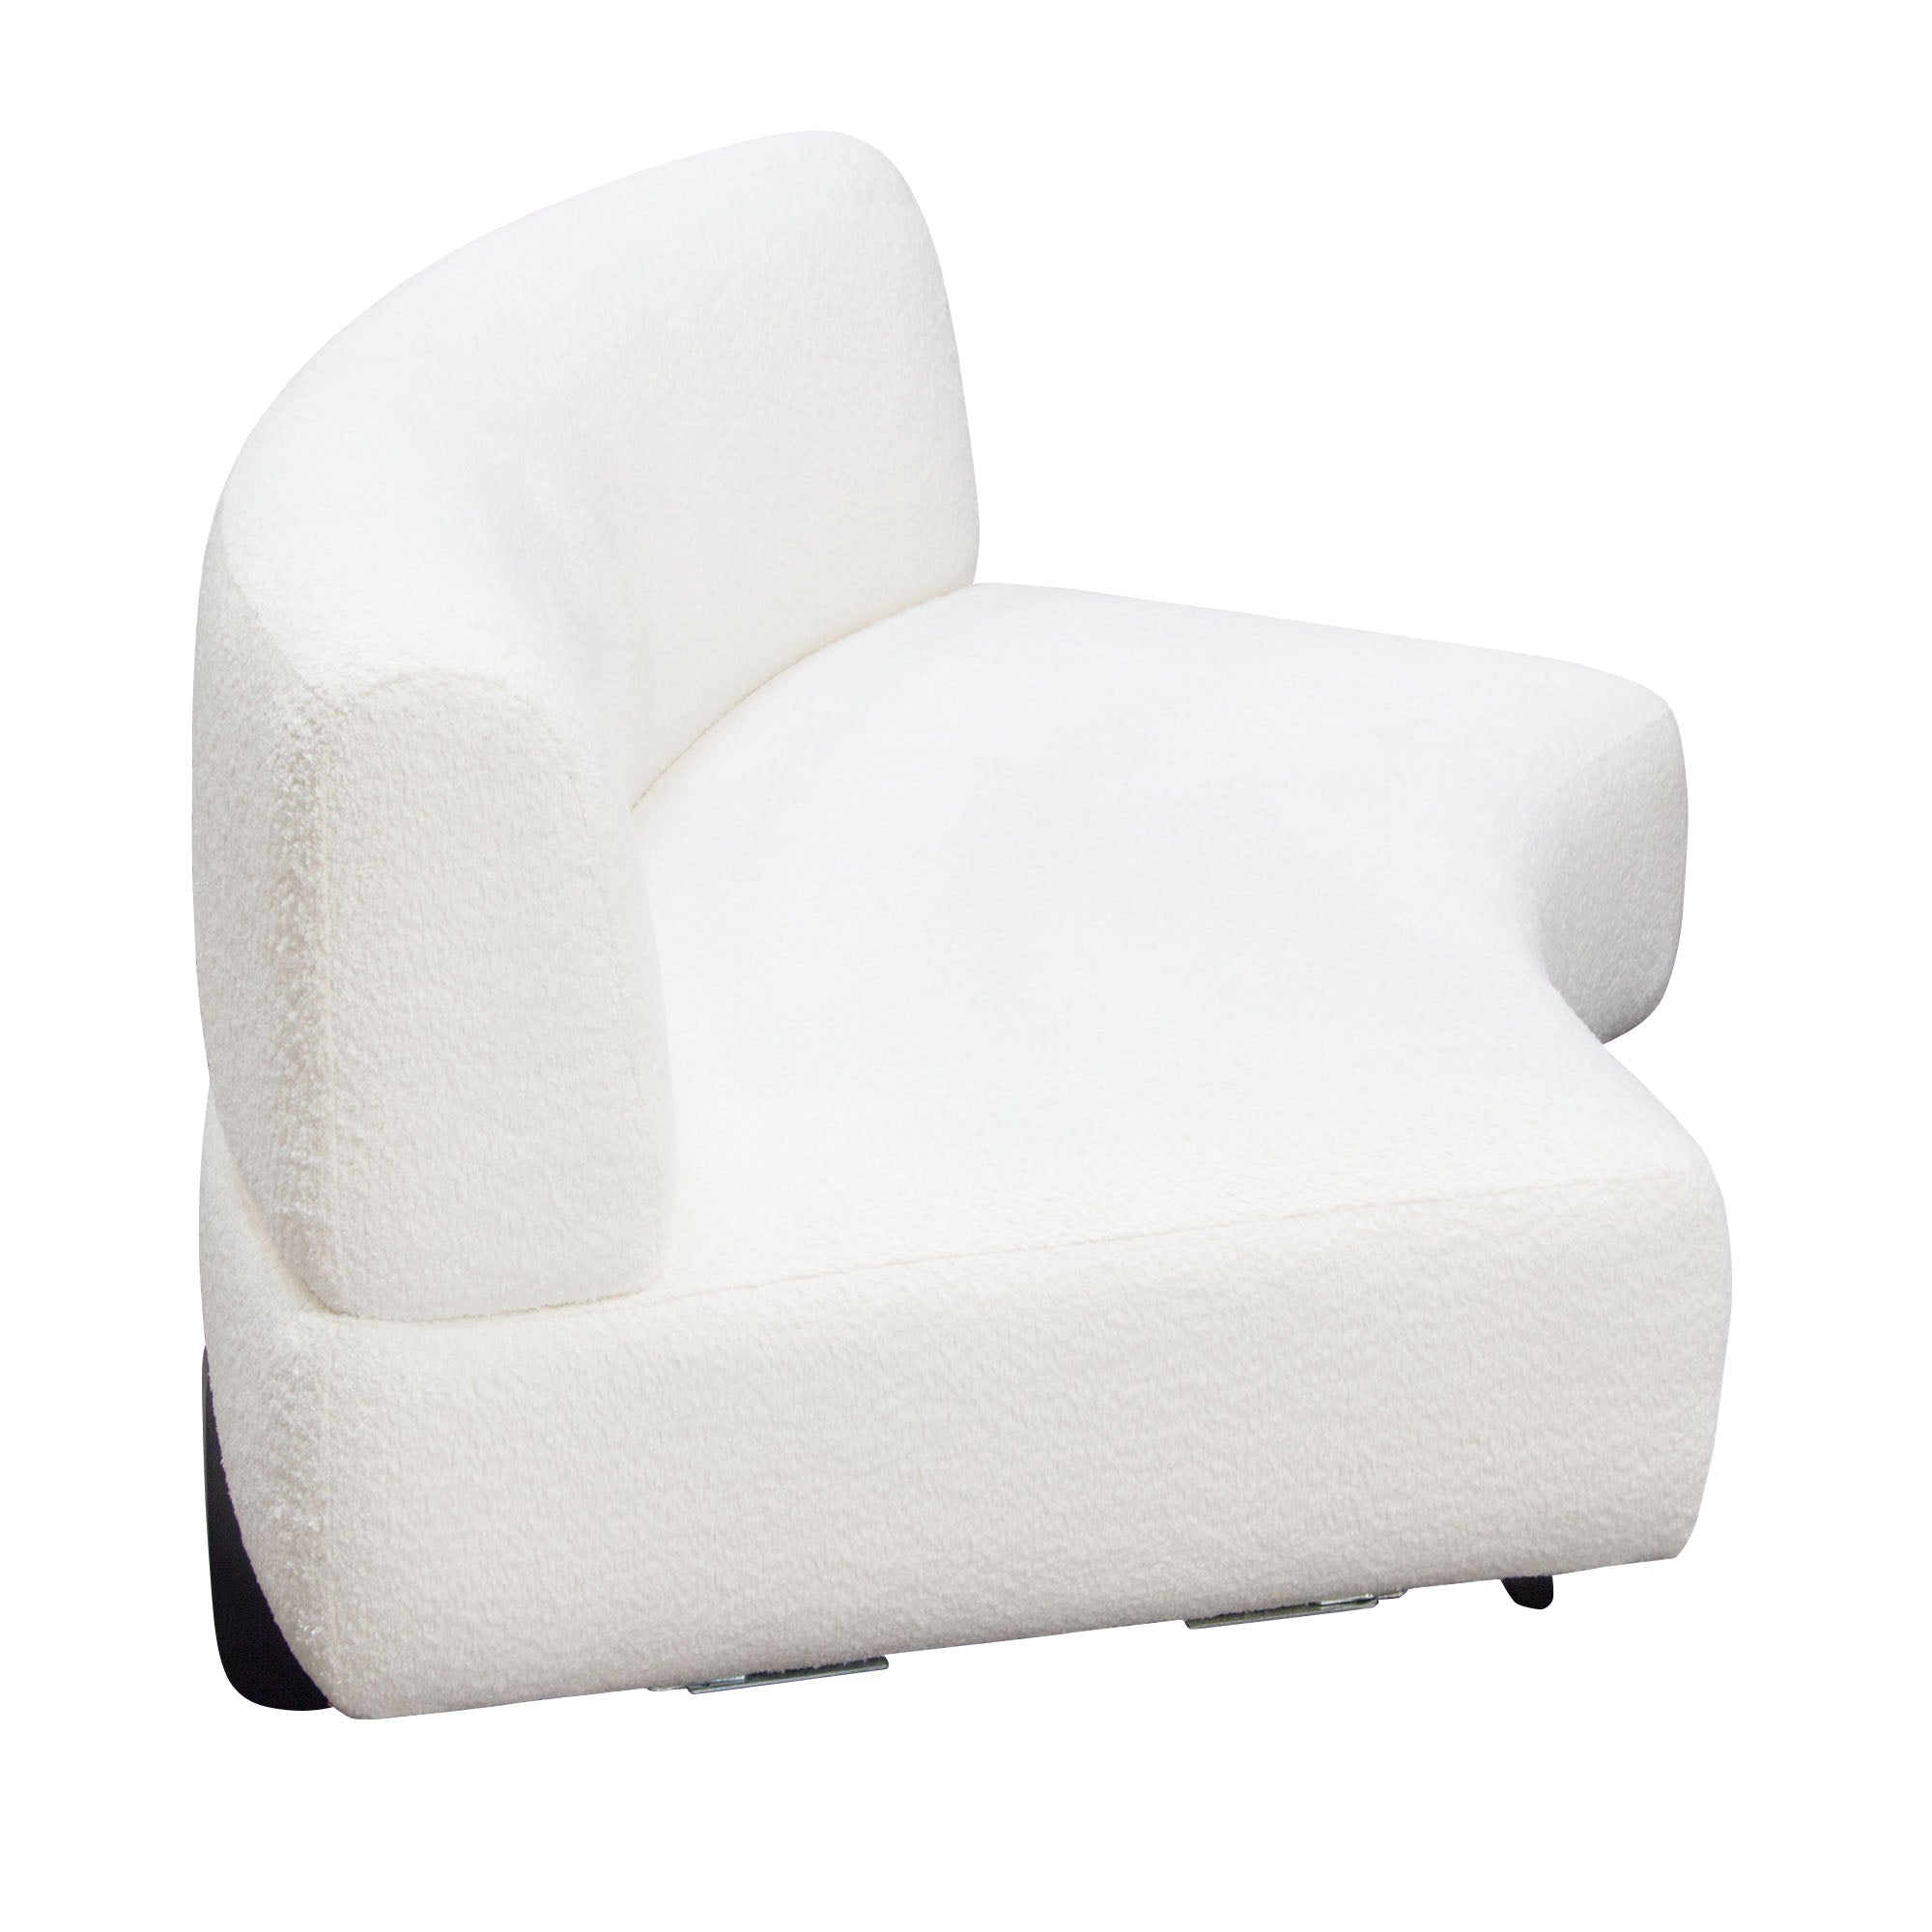 Diamond Sofa Vesper Curved Armless Sofa in Faux White Shearling with Black Wood Leg Base